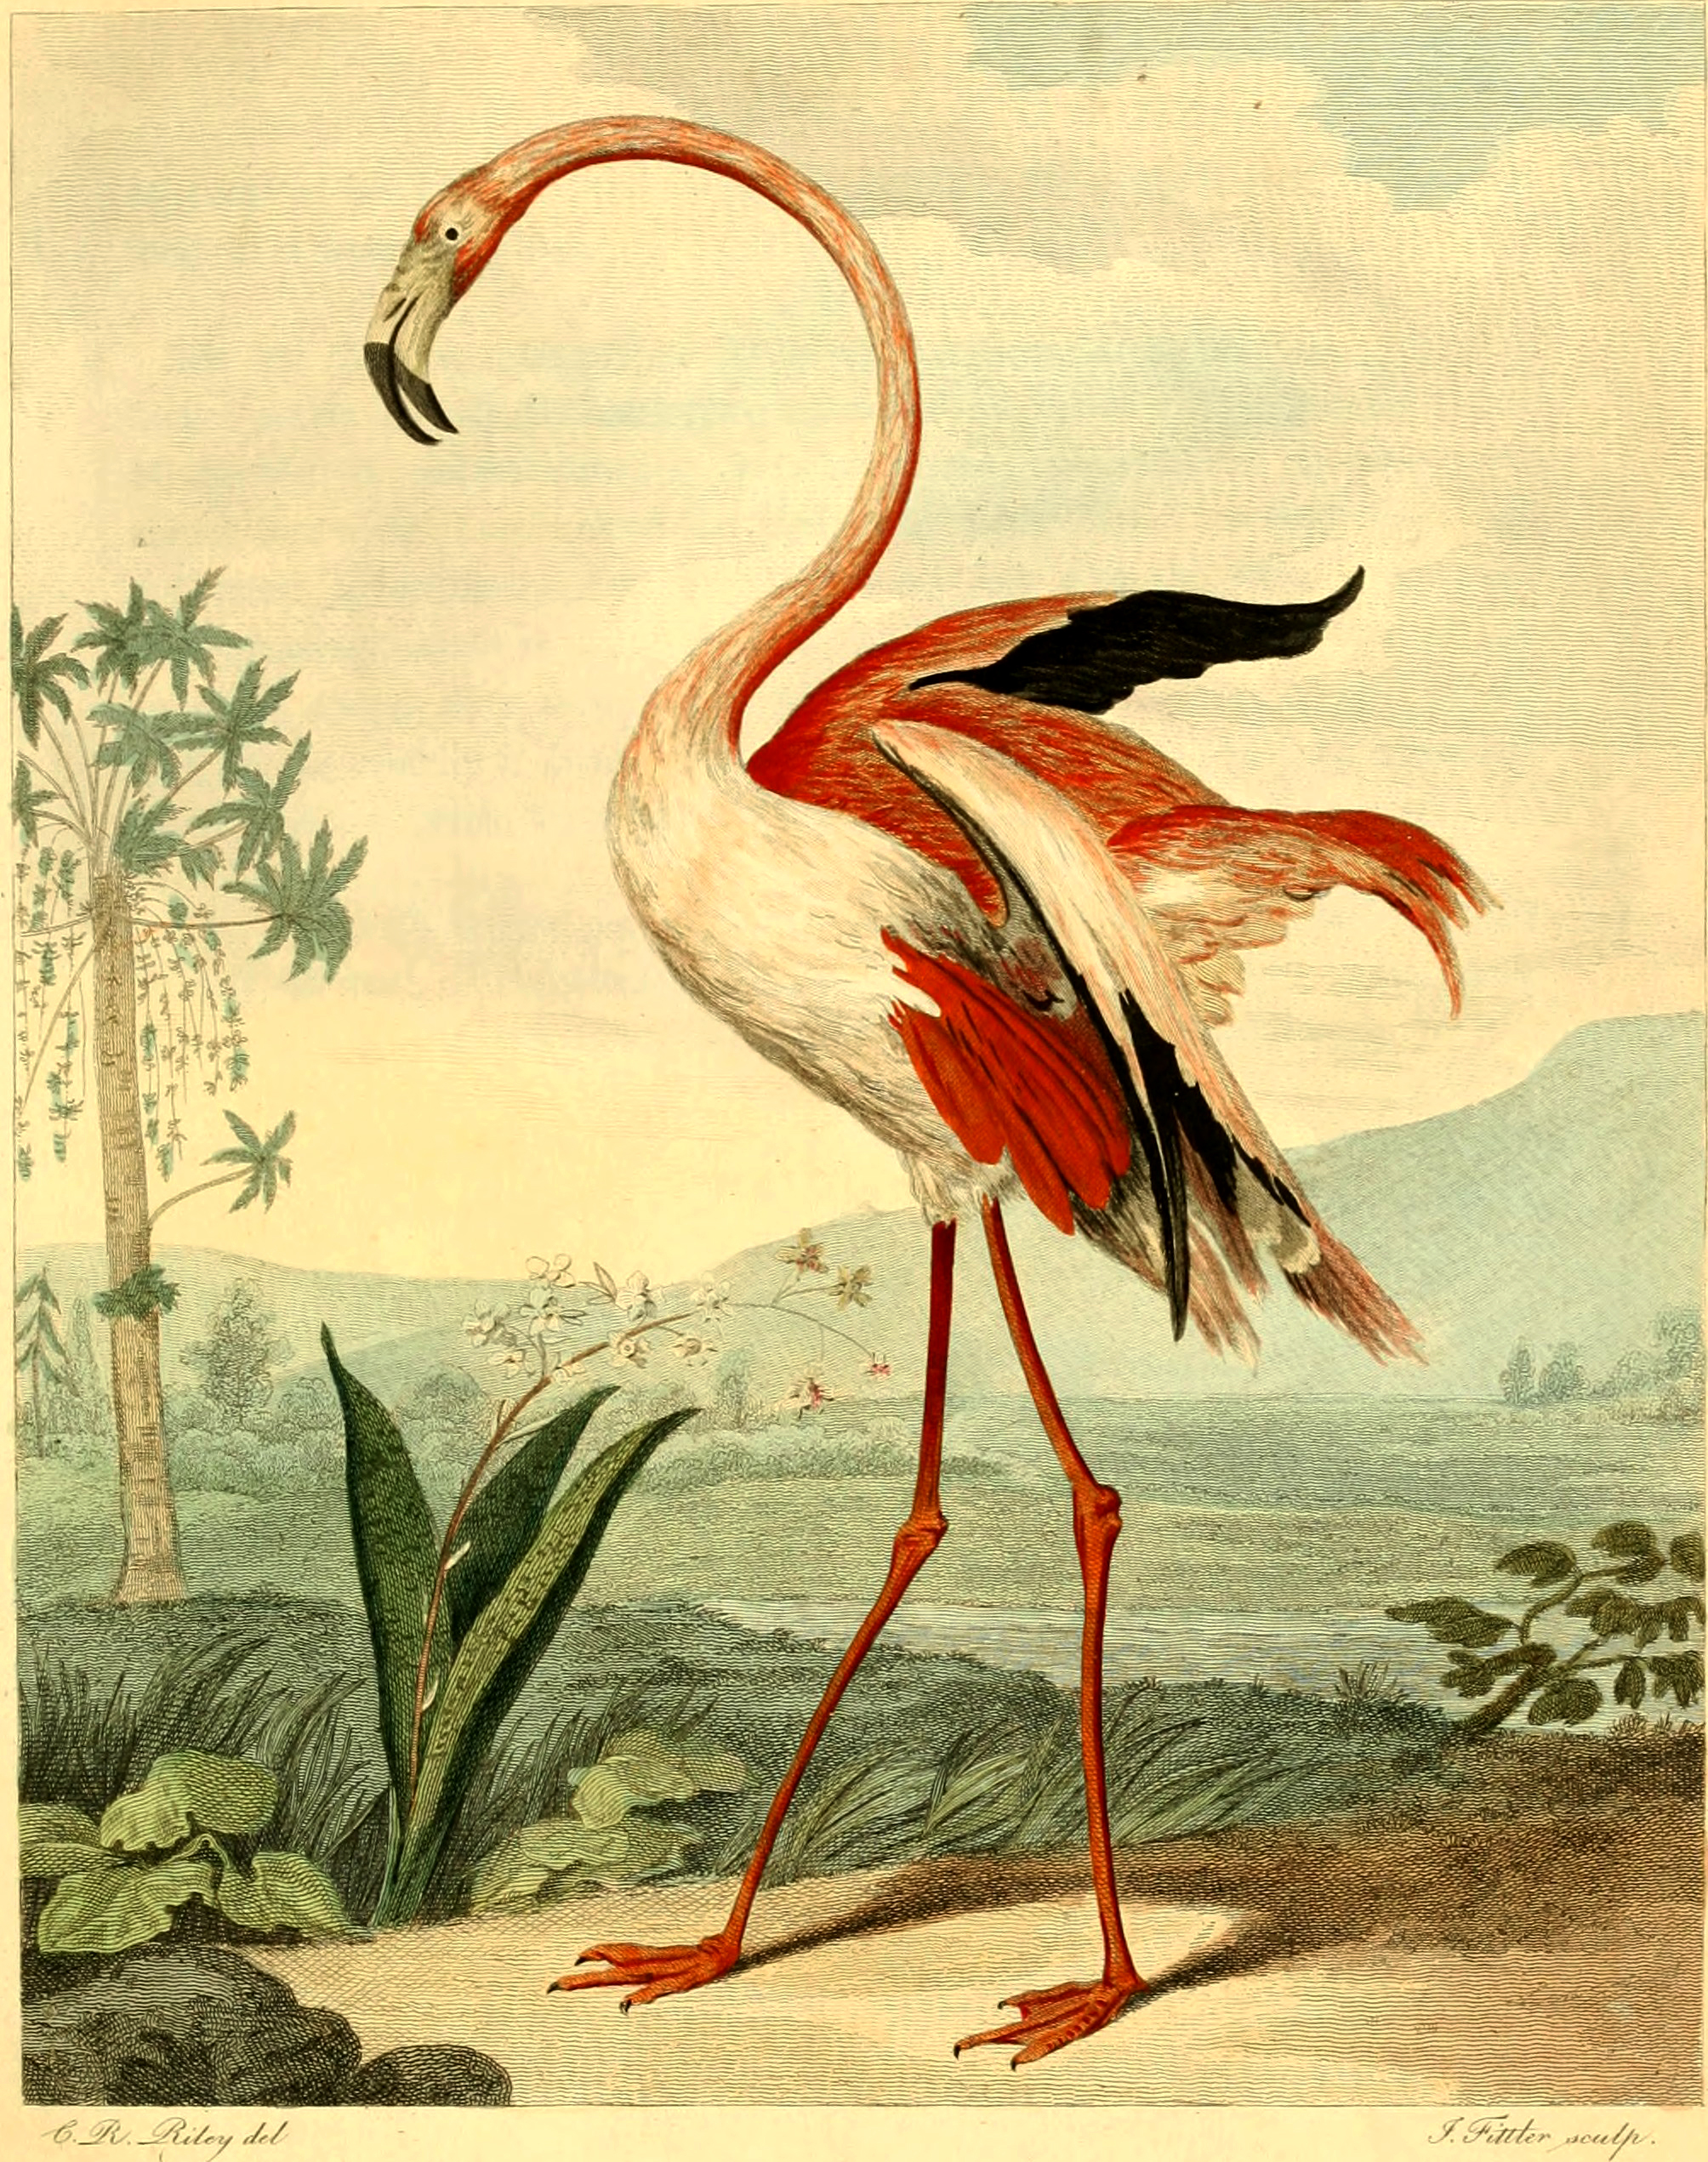 https://www.pictureboxblue.com/pbb-cont/pbb-up/2019/05/Shaw-s-flamingo-1792-s.jpg